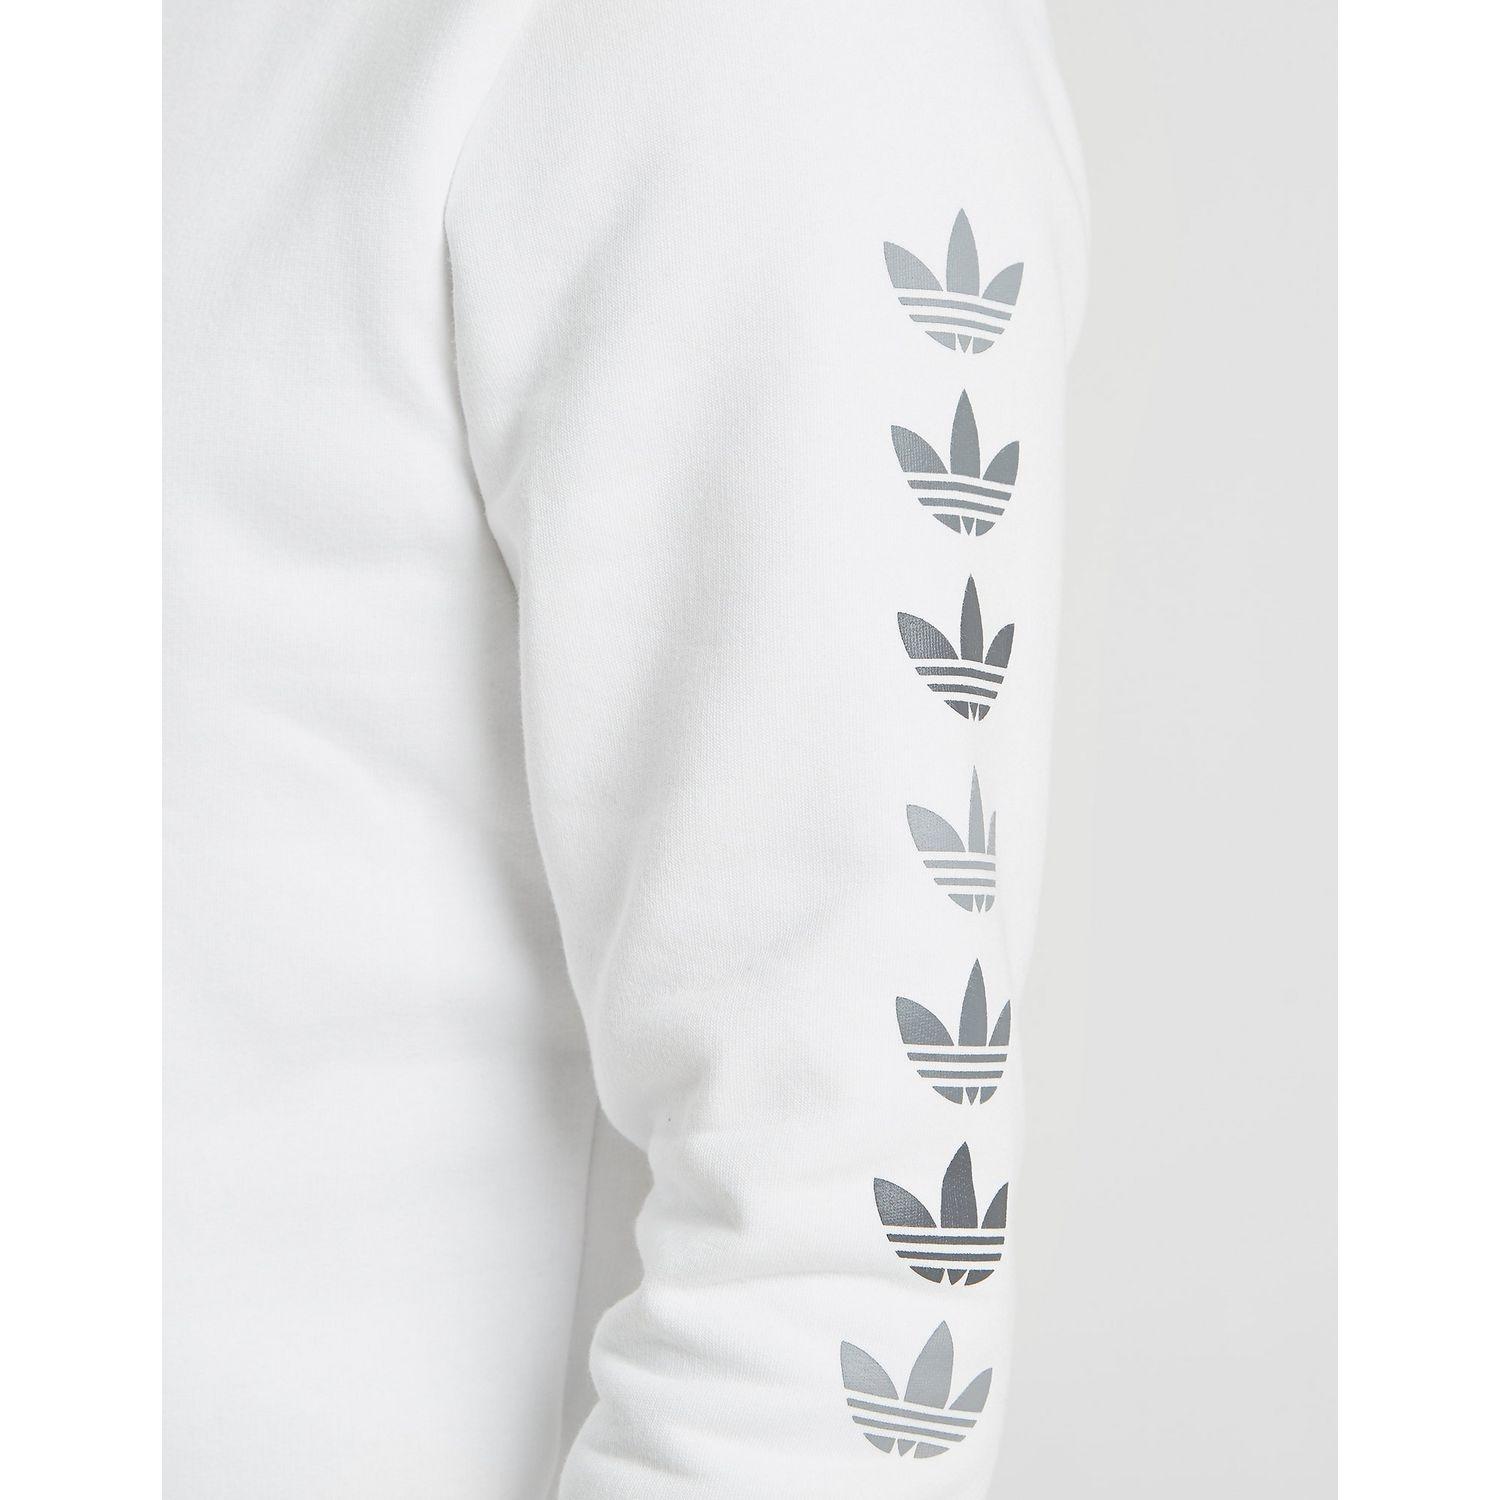 adidas Originals Cotton Tape Qqr Crew Sweatshirt in White/Black/Red (White)  for Men - Lyst